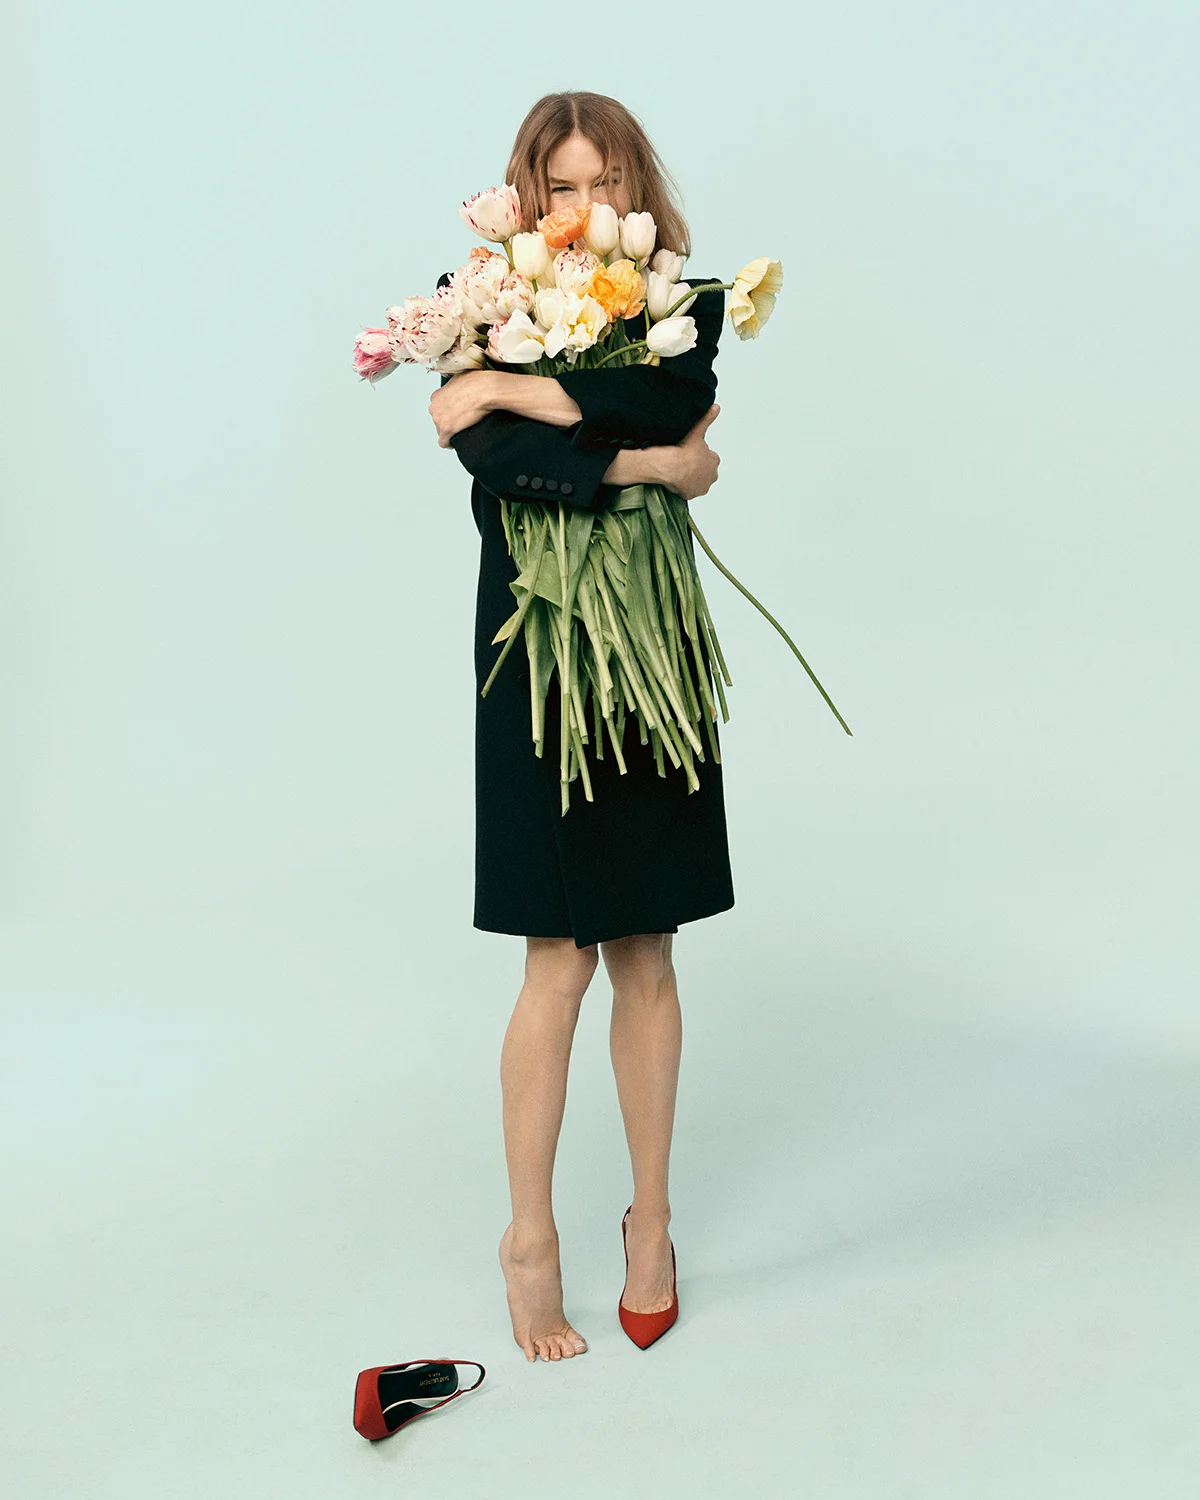 Renée Zellweger covers Harper’s Bazaar US April 2022 by Mel Bles